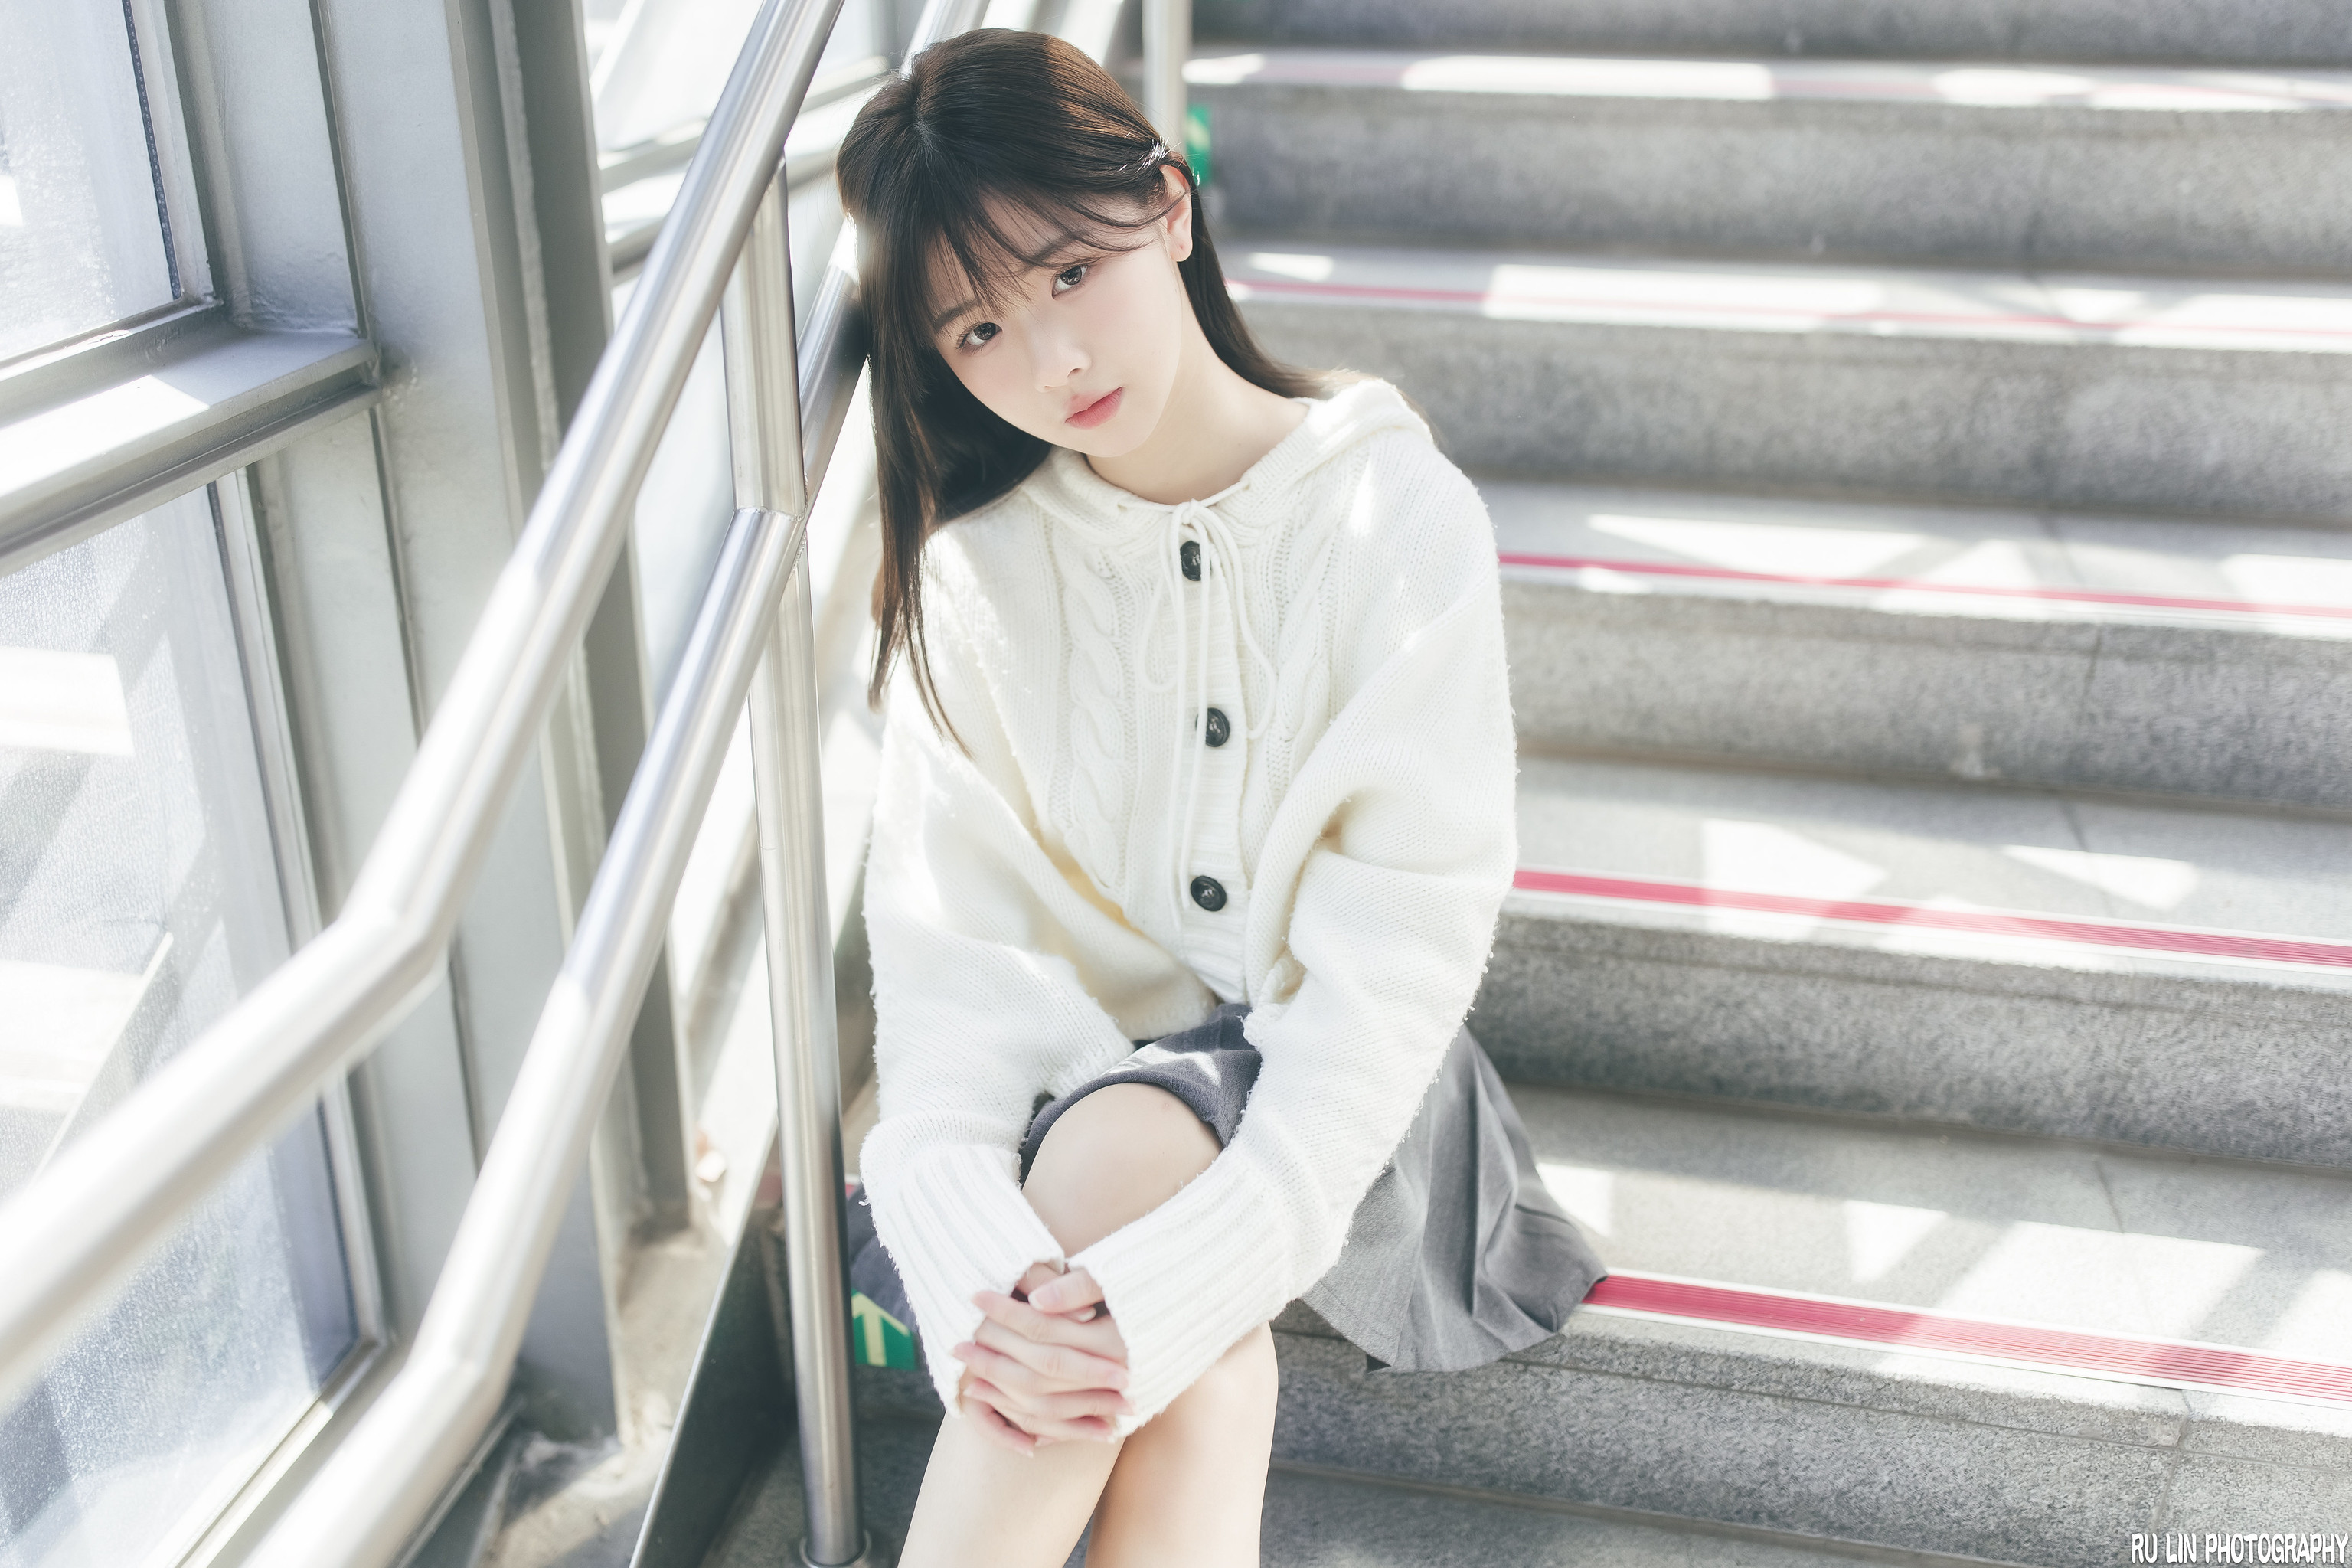 Ru Lin Women Brunette Sweater Skirt Asian Legs Crossed Resting Head Stairs 3072x2048